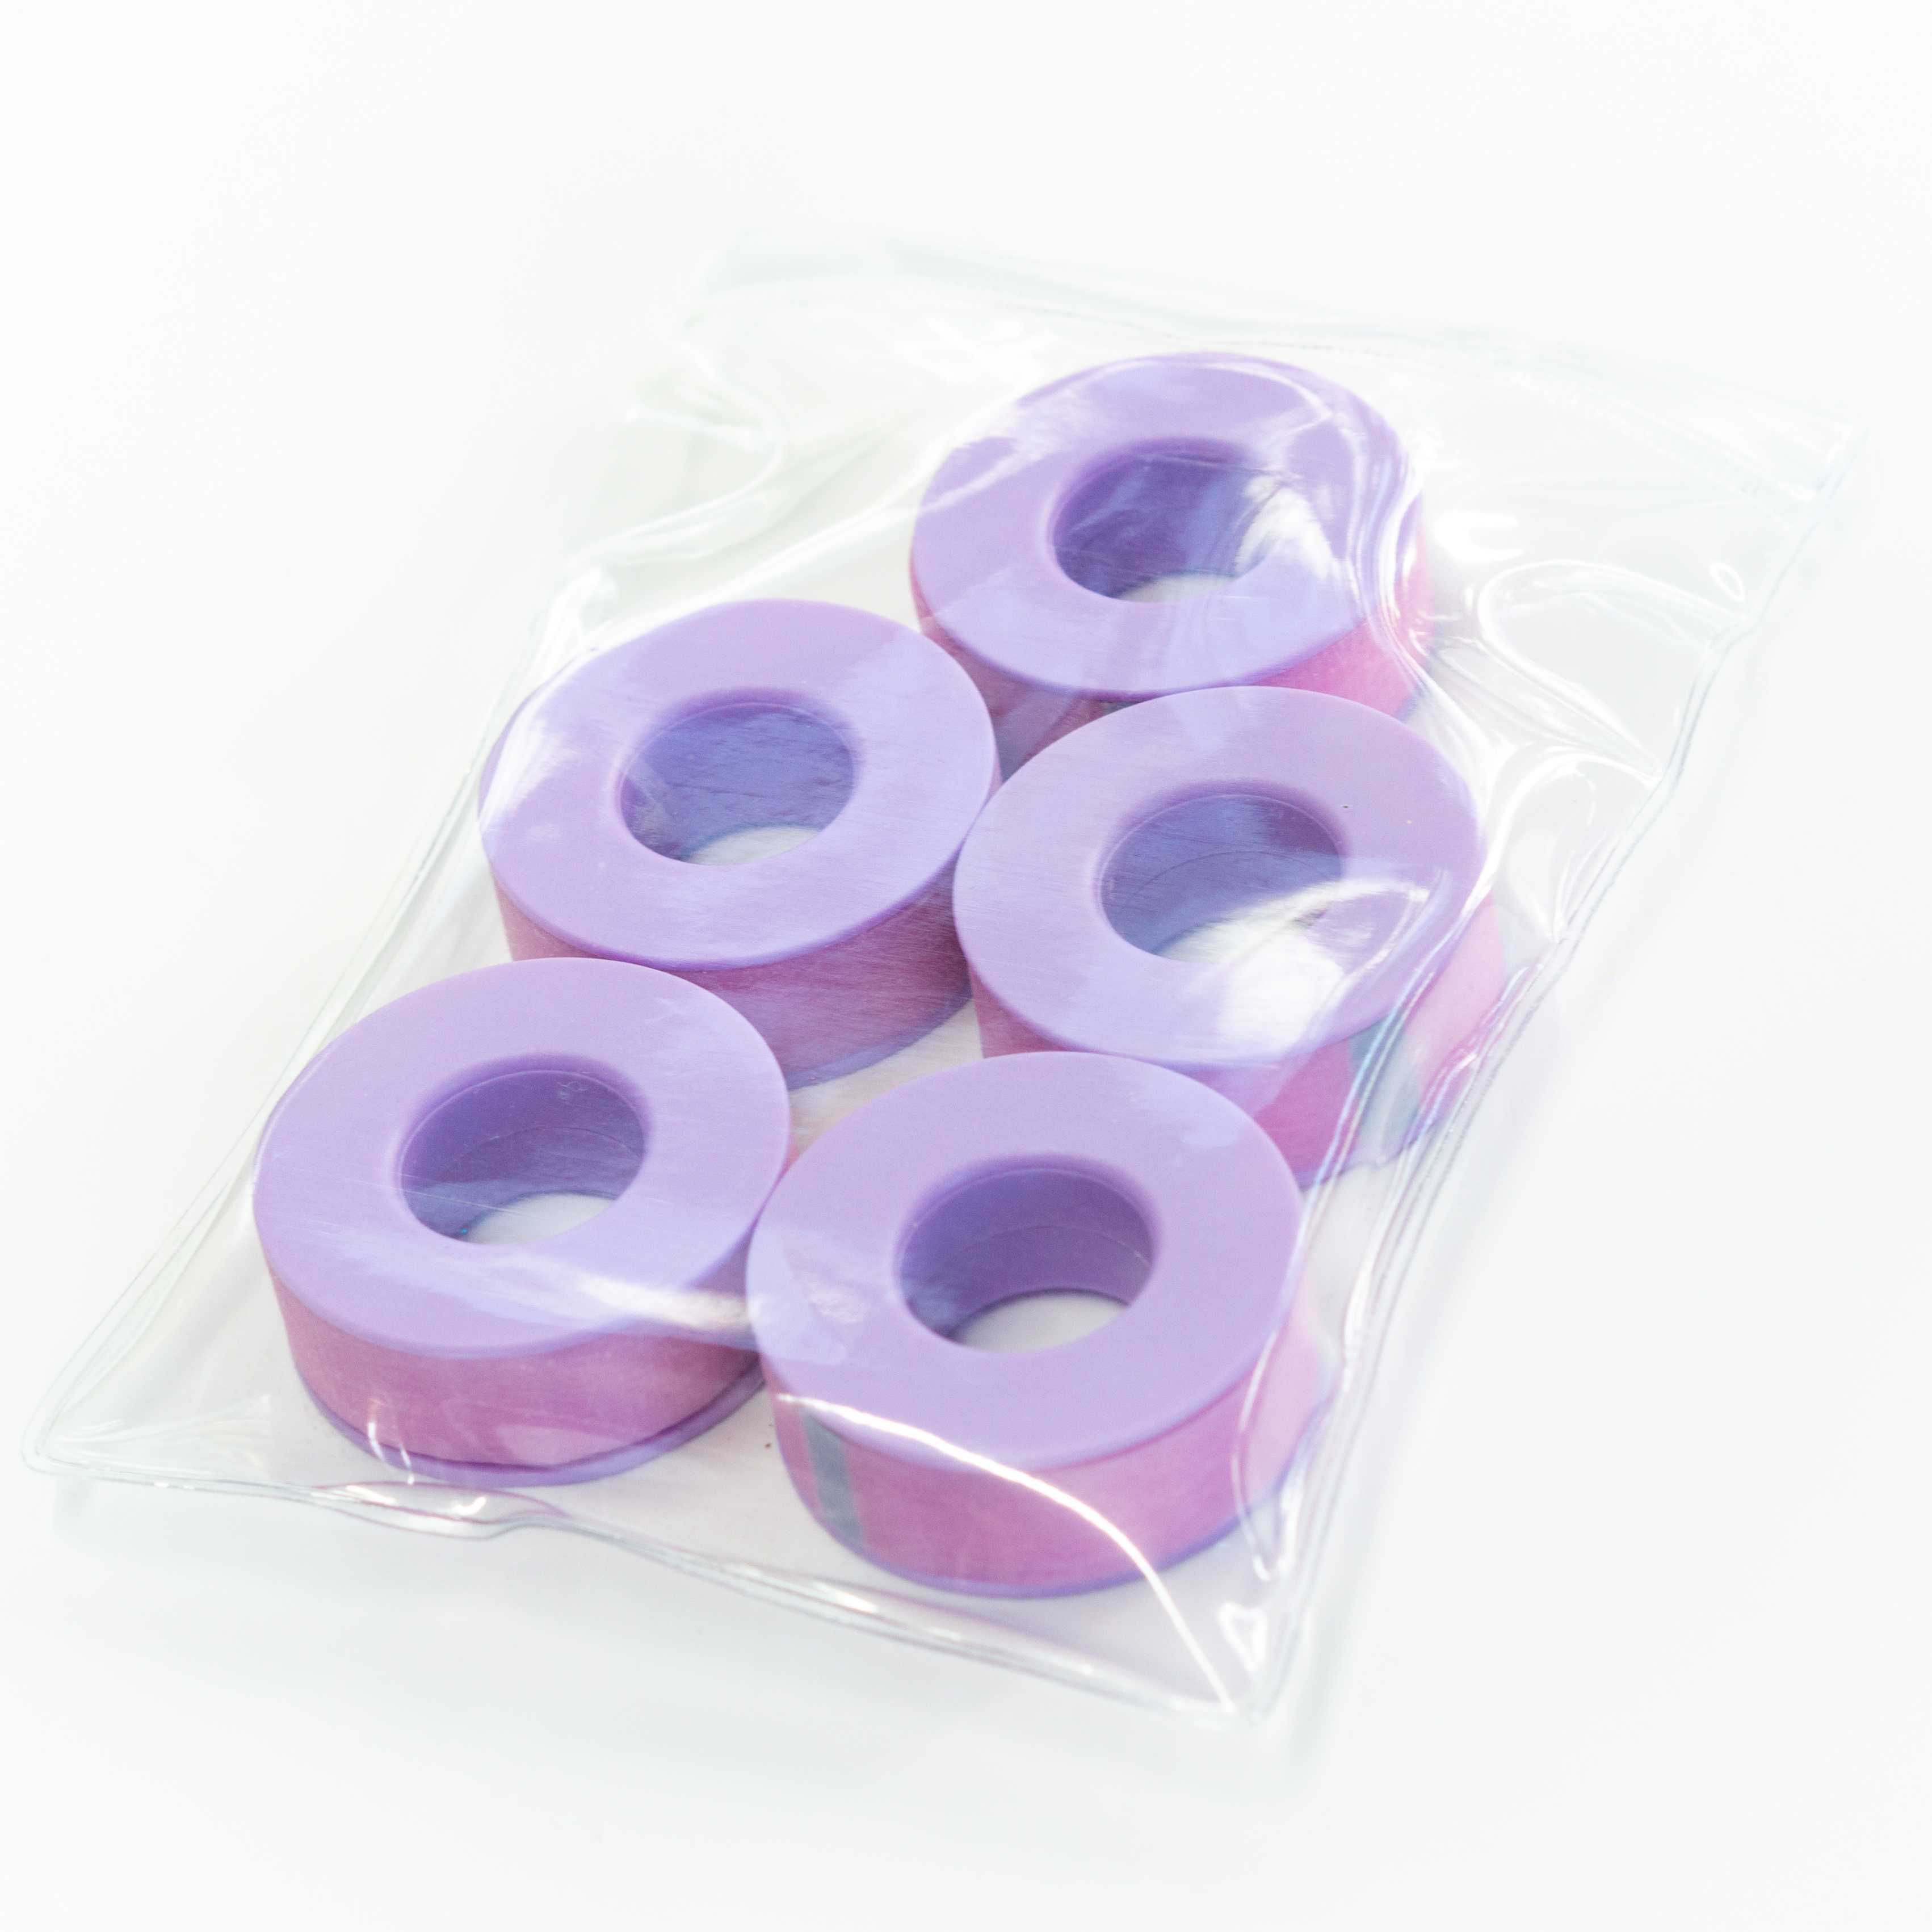 Five purple tape rolls in a plastic bag.